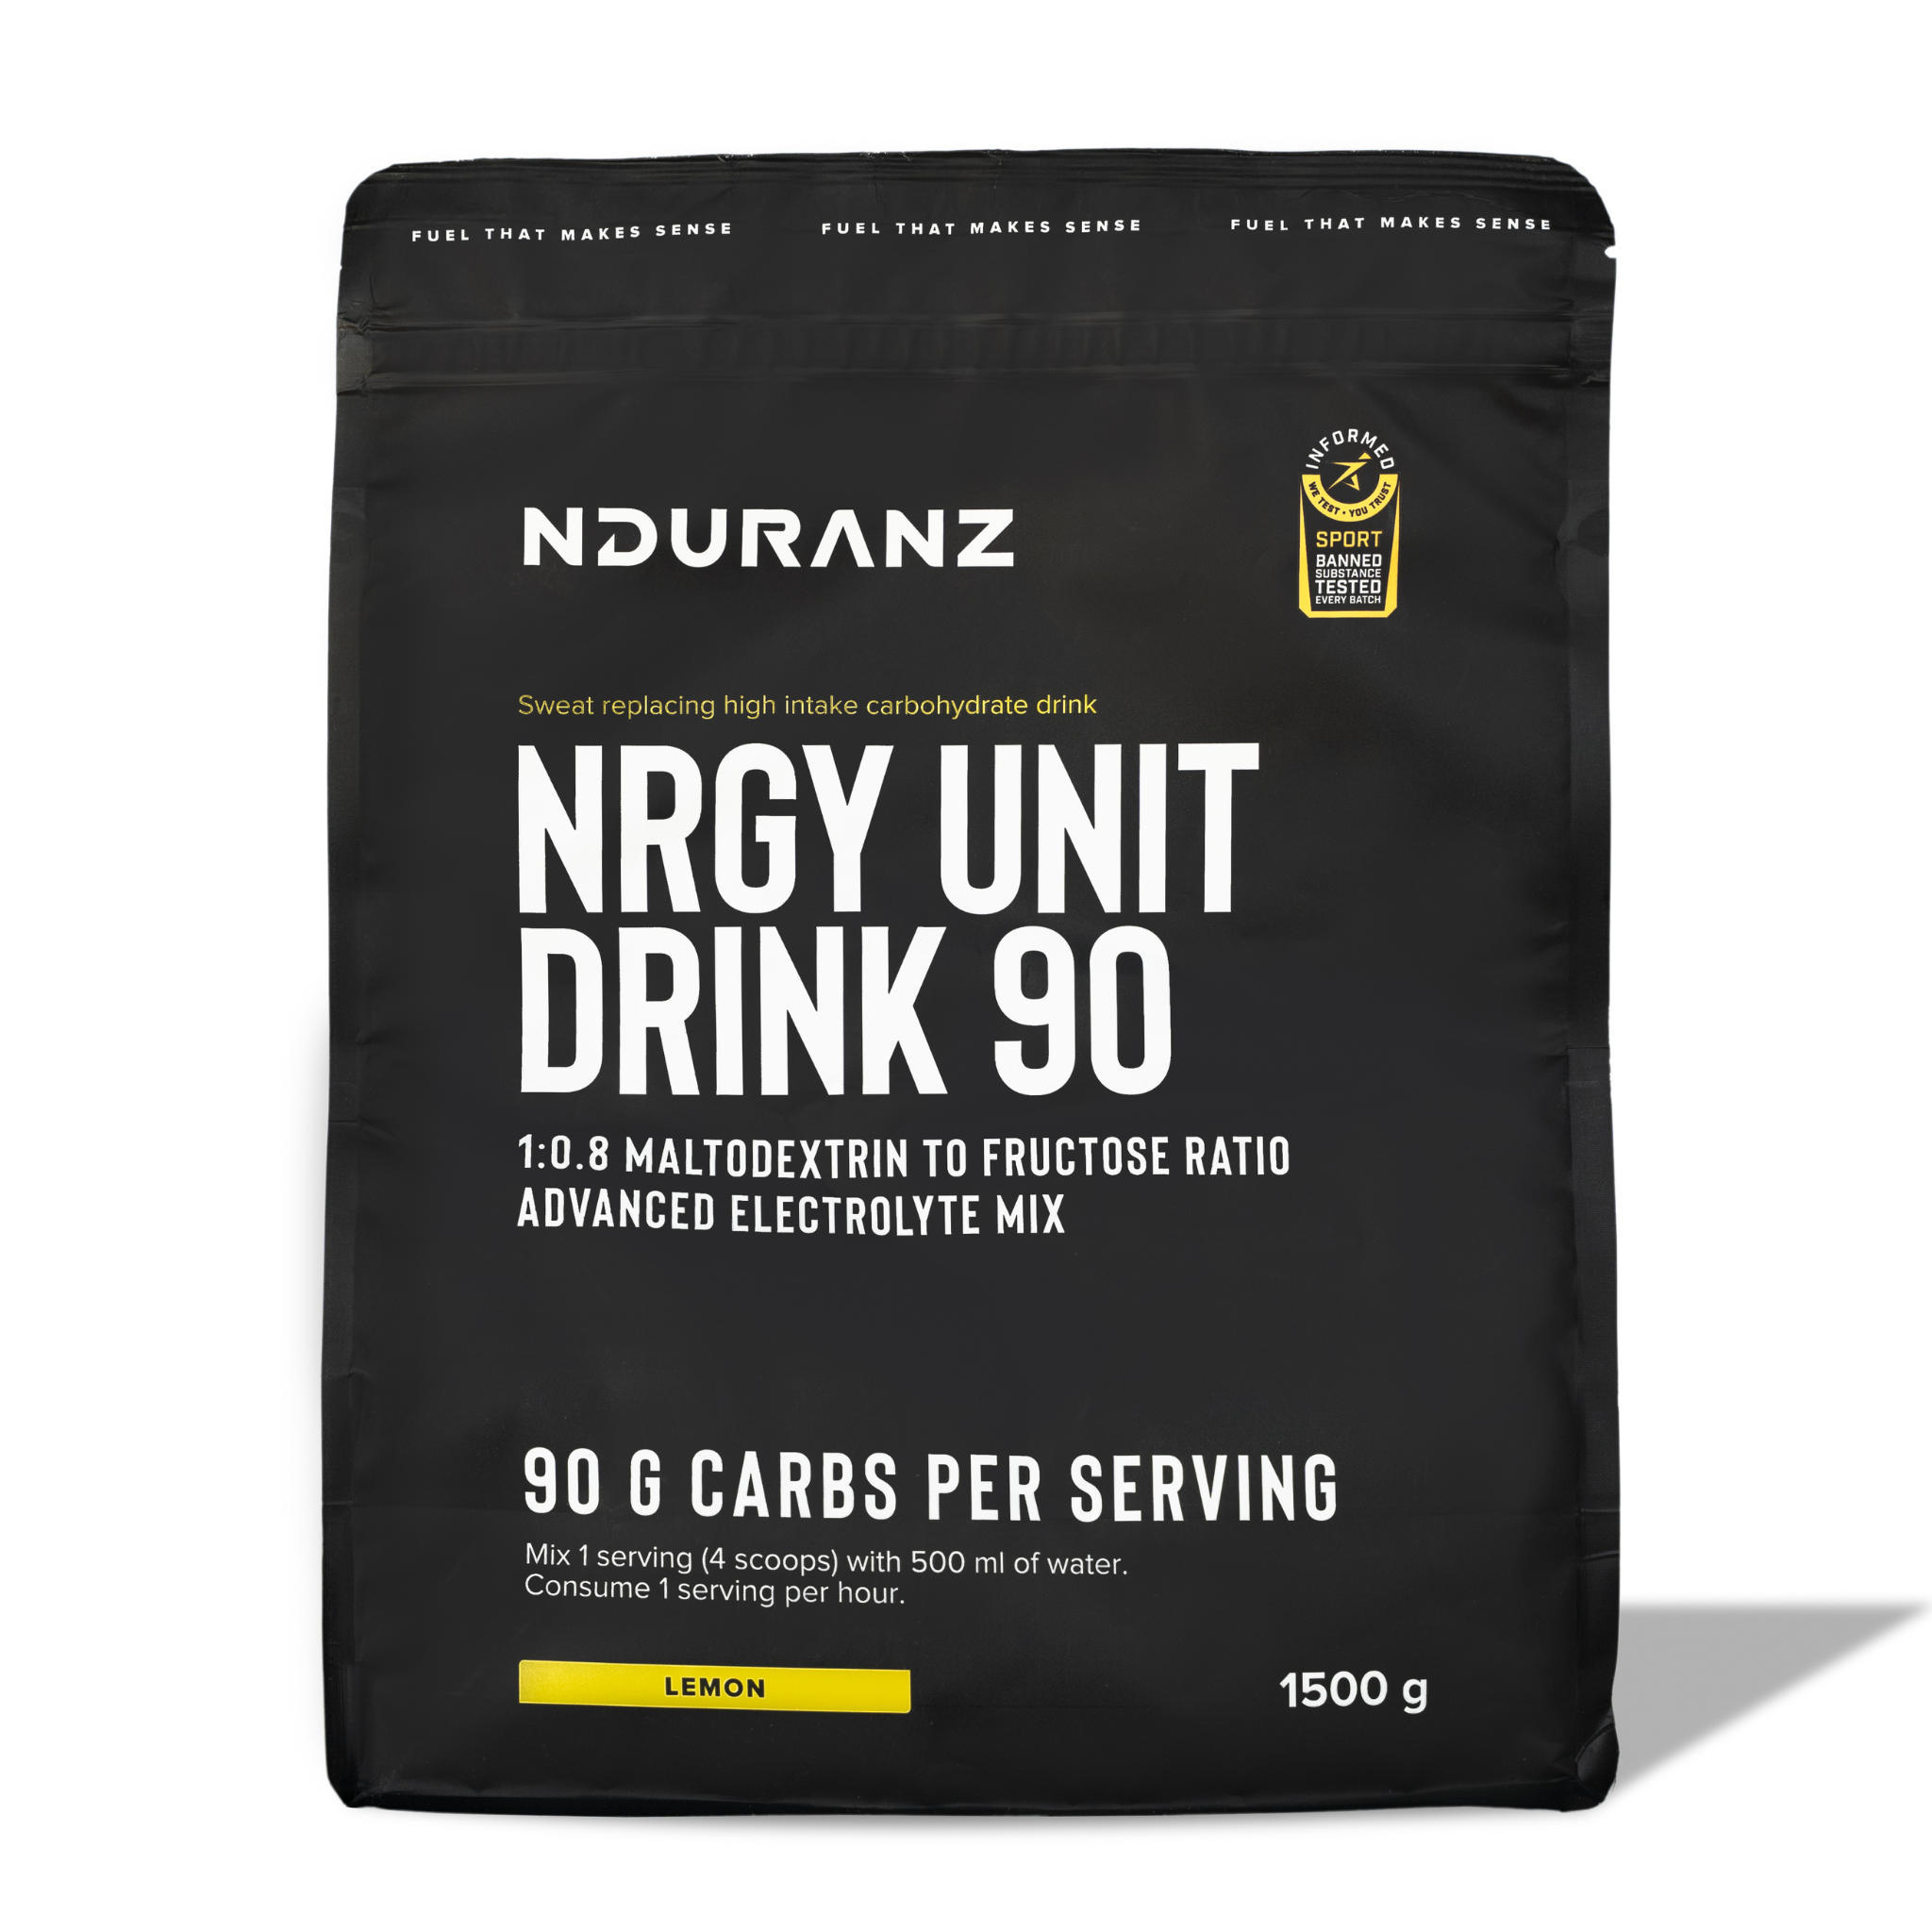 Nrgy Unit Drink 90 - 1500 g